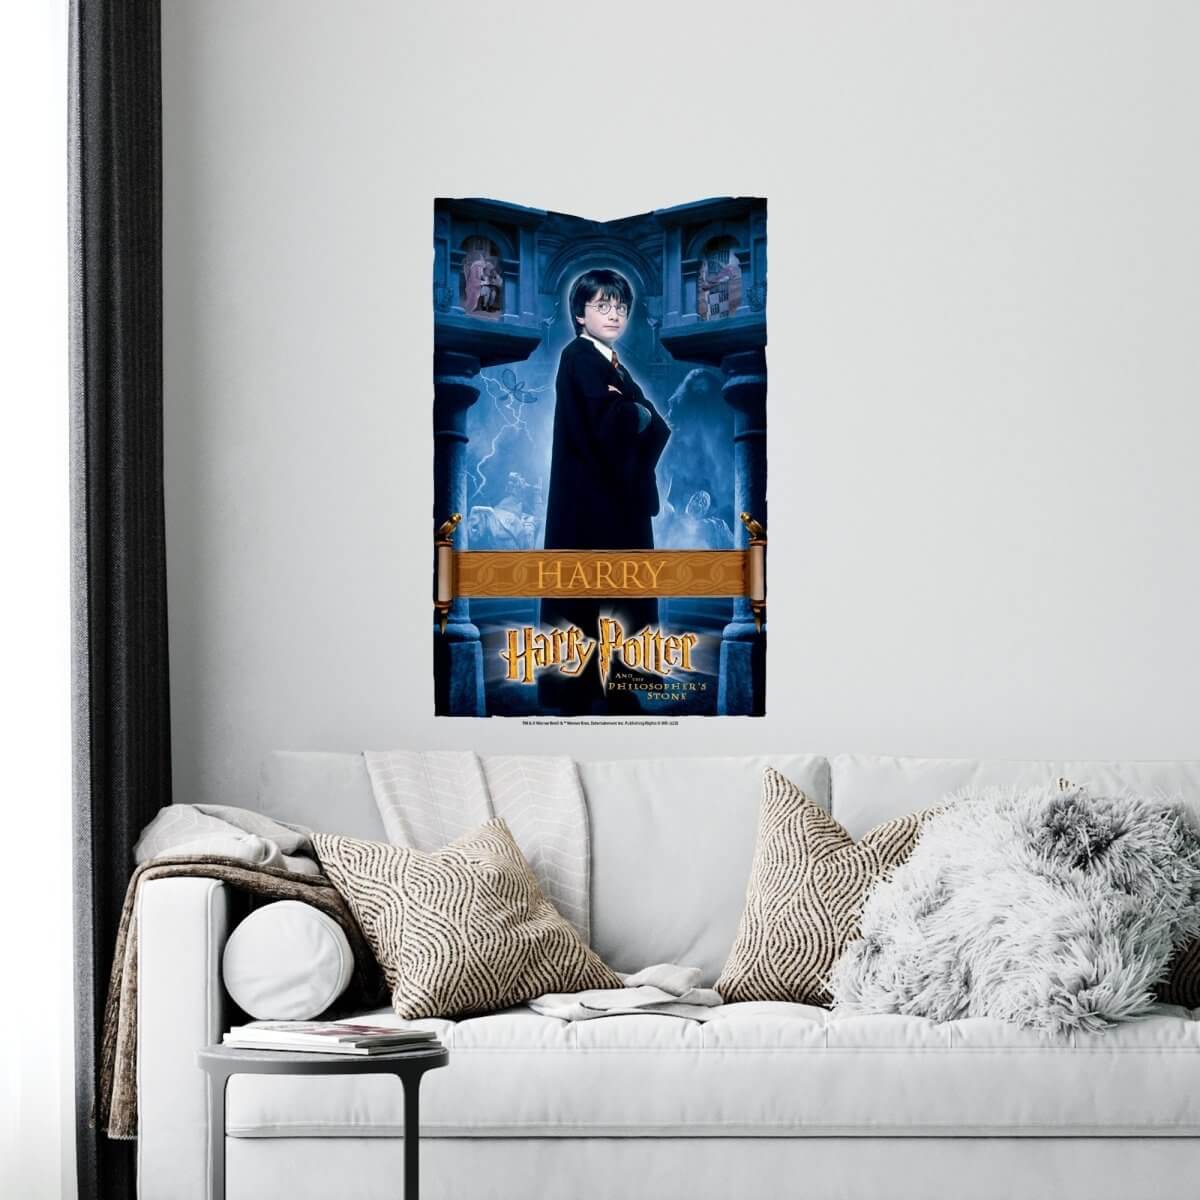 Kismet Decals Harry Potter Harry Poster Licensed Wall Sticker - Easy DIY Home & Kids Room Decor Wall Decal Art - Kismet Decals